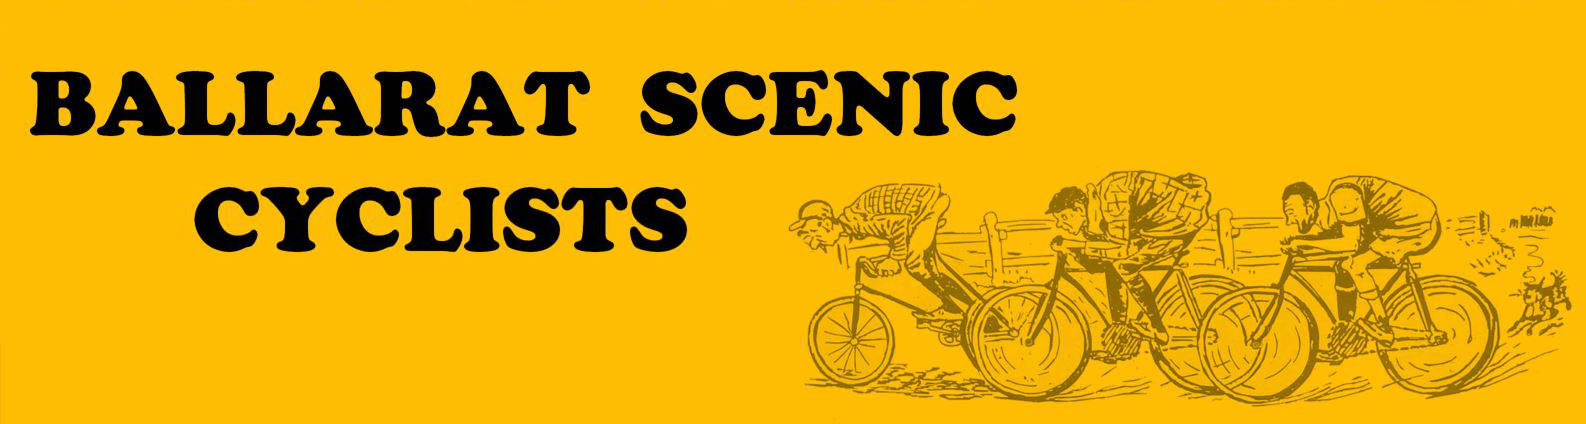 Ballarat Scenic Cyclists